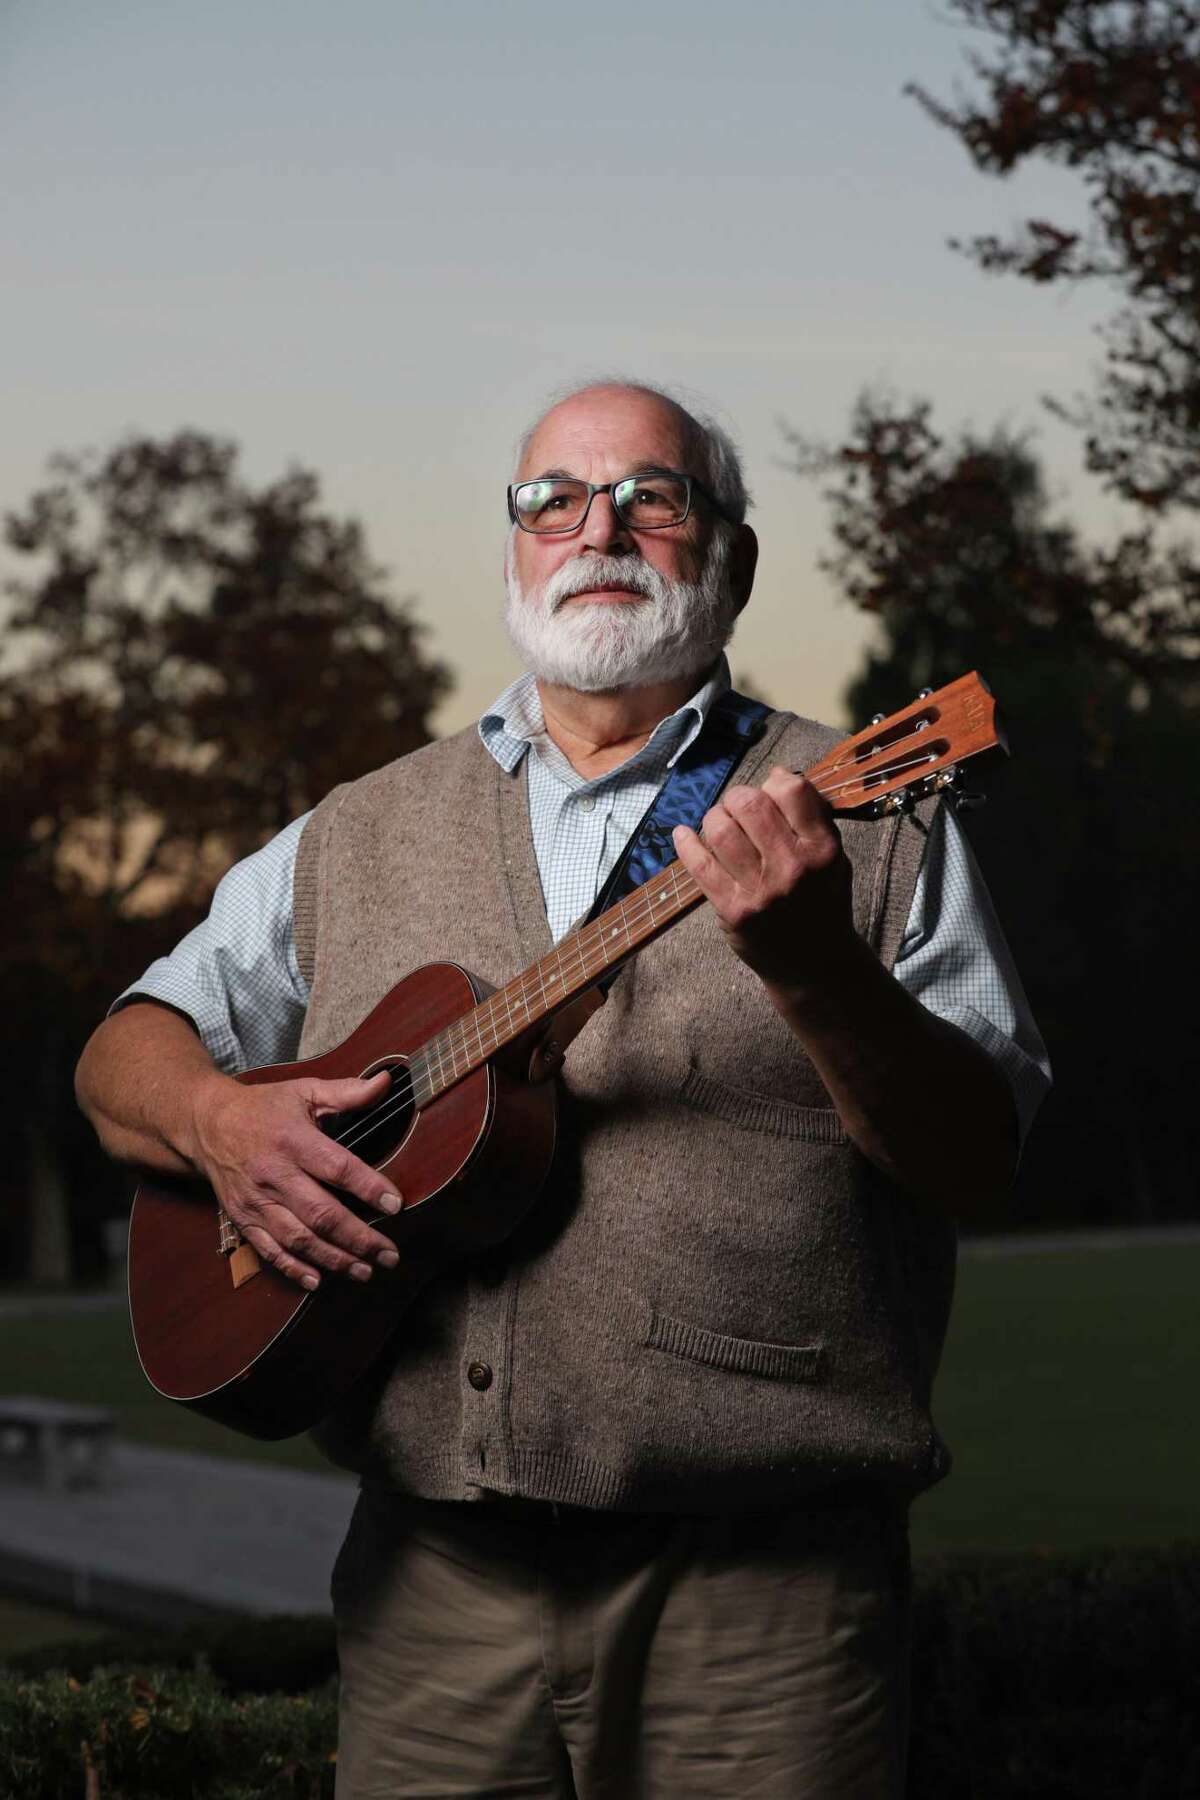 Herb Salomon is a ukulele player at the Rossmoor retirement community in Walnut Creek.